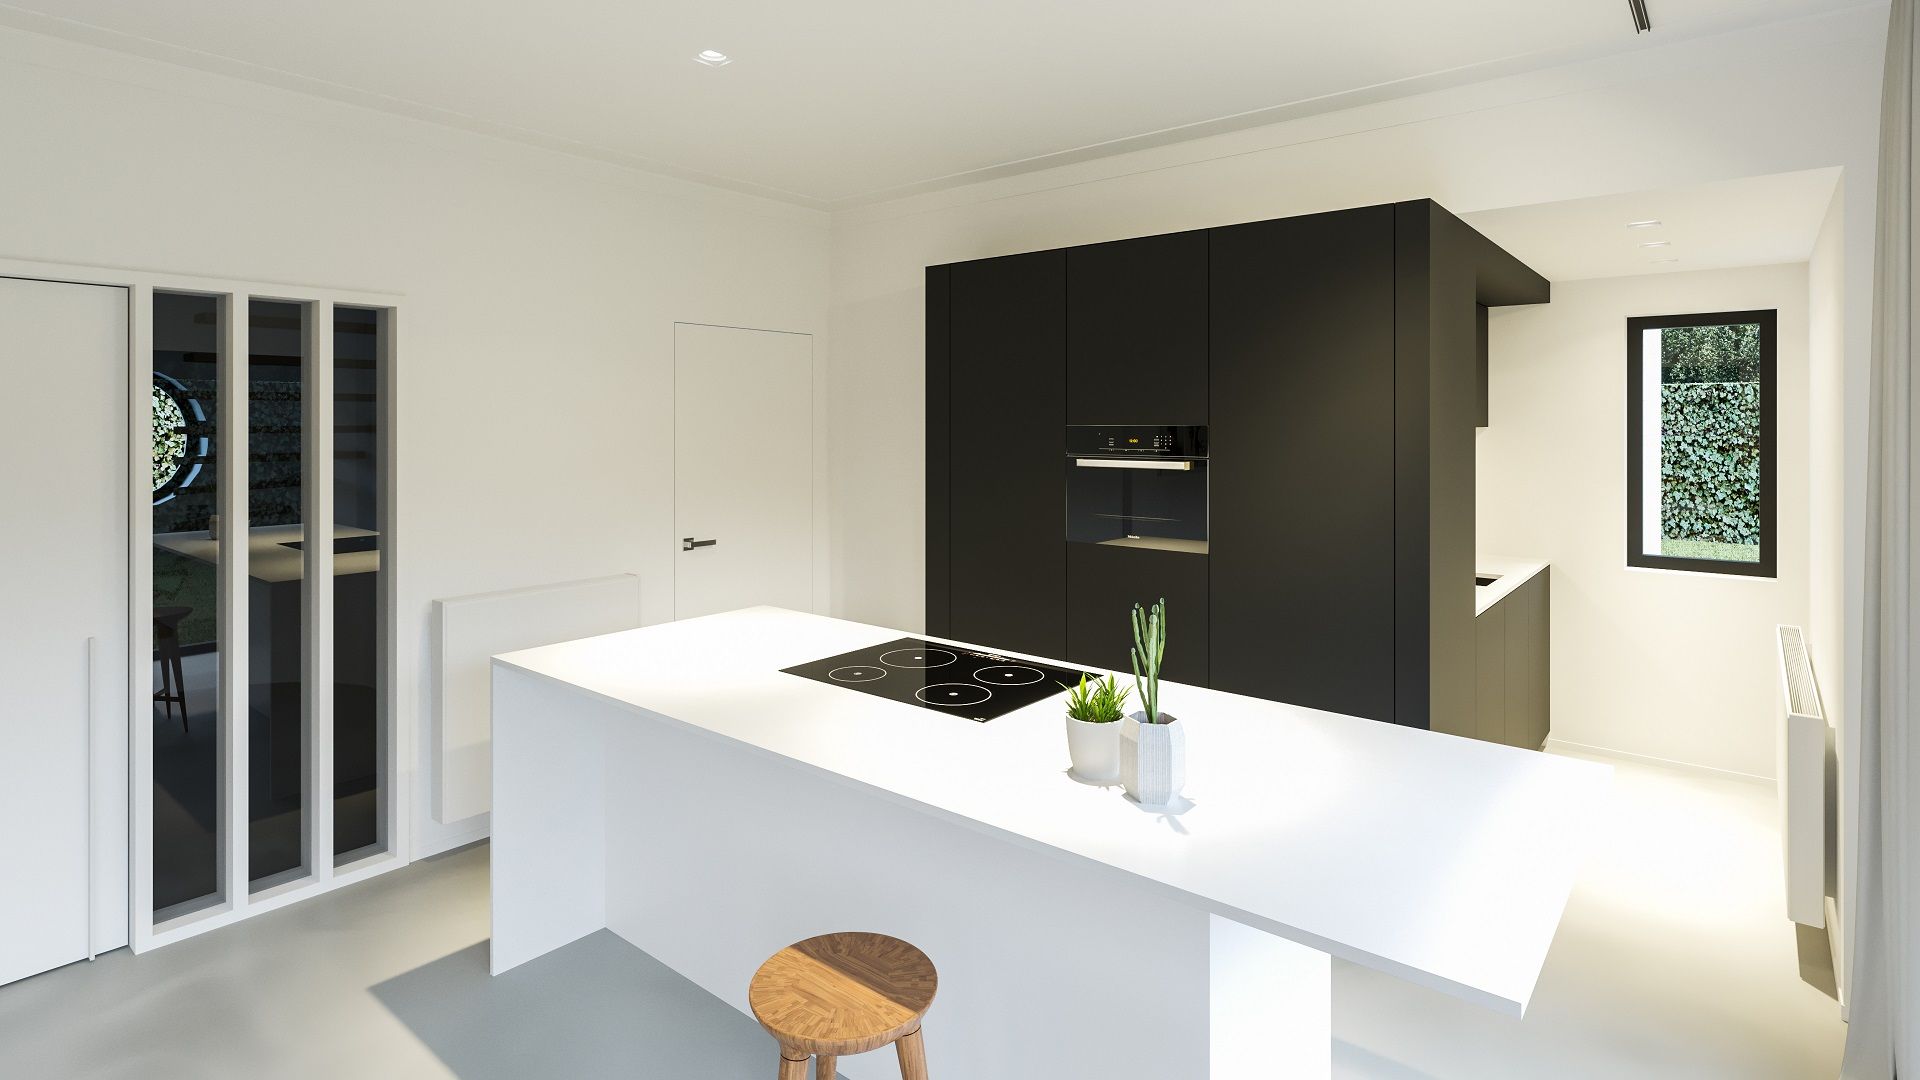 Kookeiland Studio Govaerts Moderne keukens kookeiland gietvloer nis zwart-wit modern leefkeuken